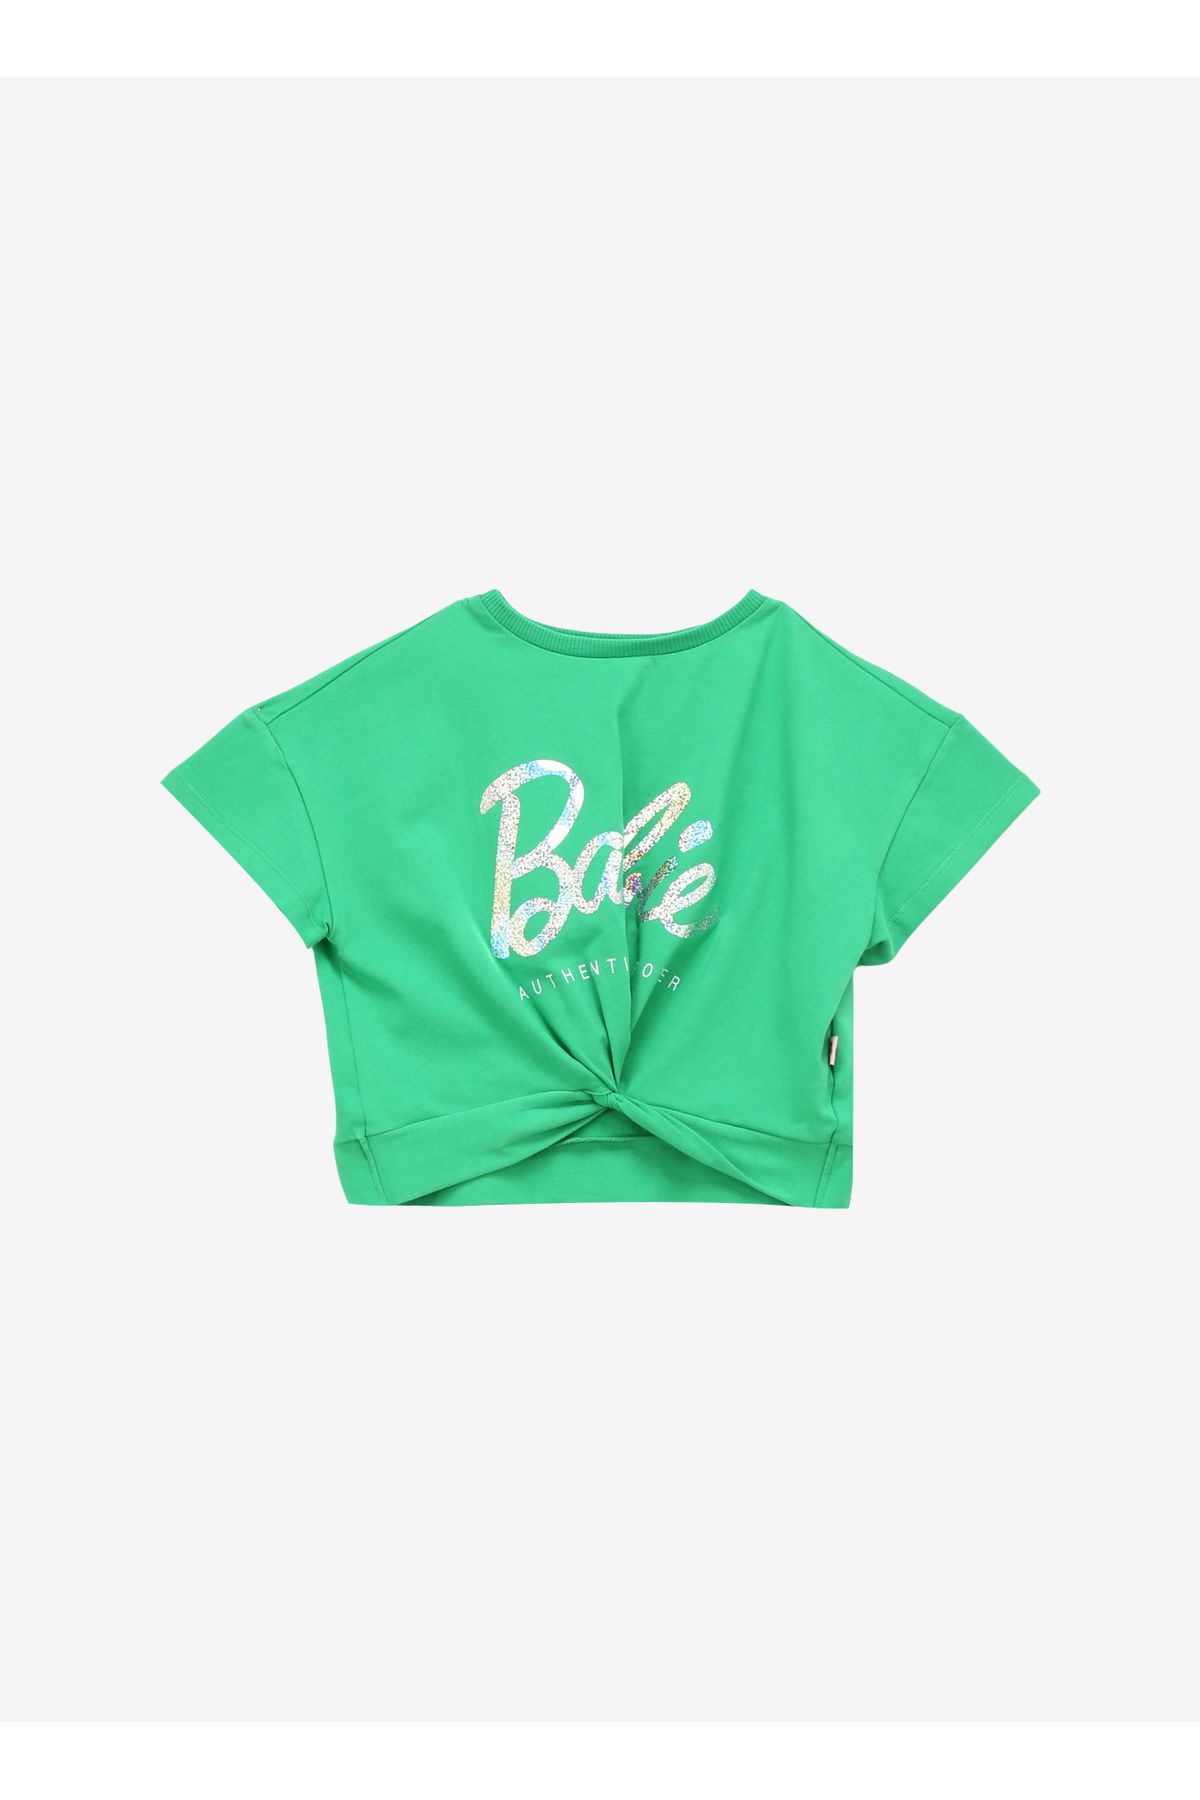 Barbie Varaklı Yeşil Kız Çocuk T-Shirt BRB4SG-TST6003